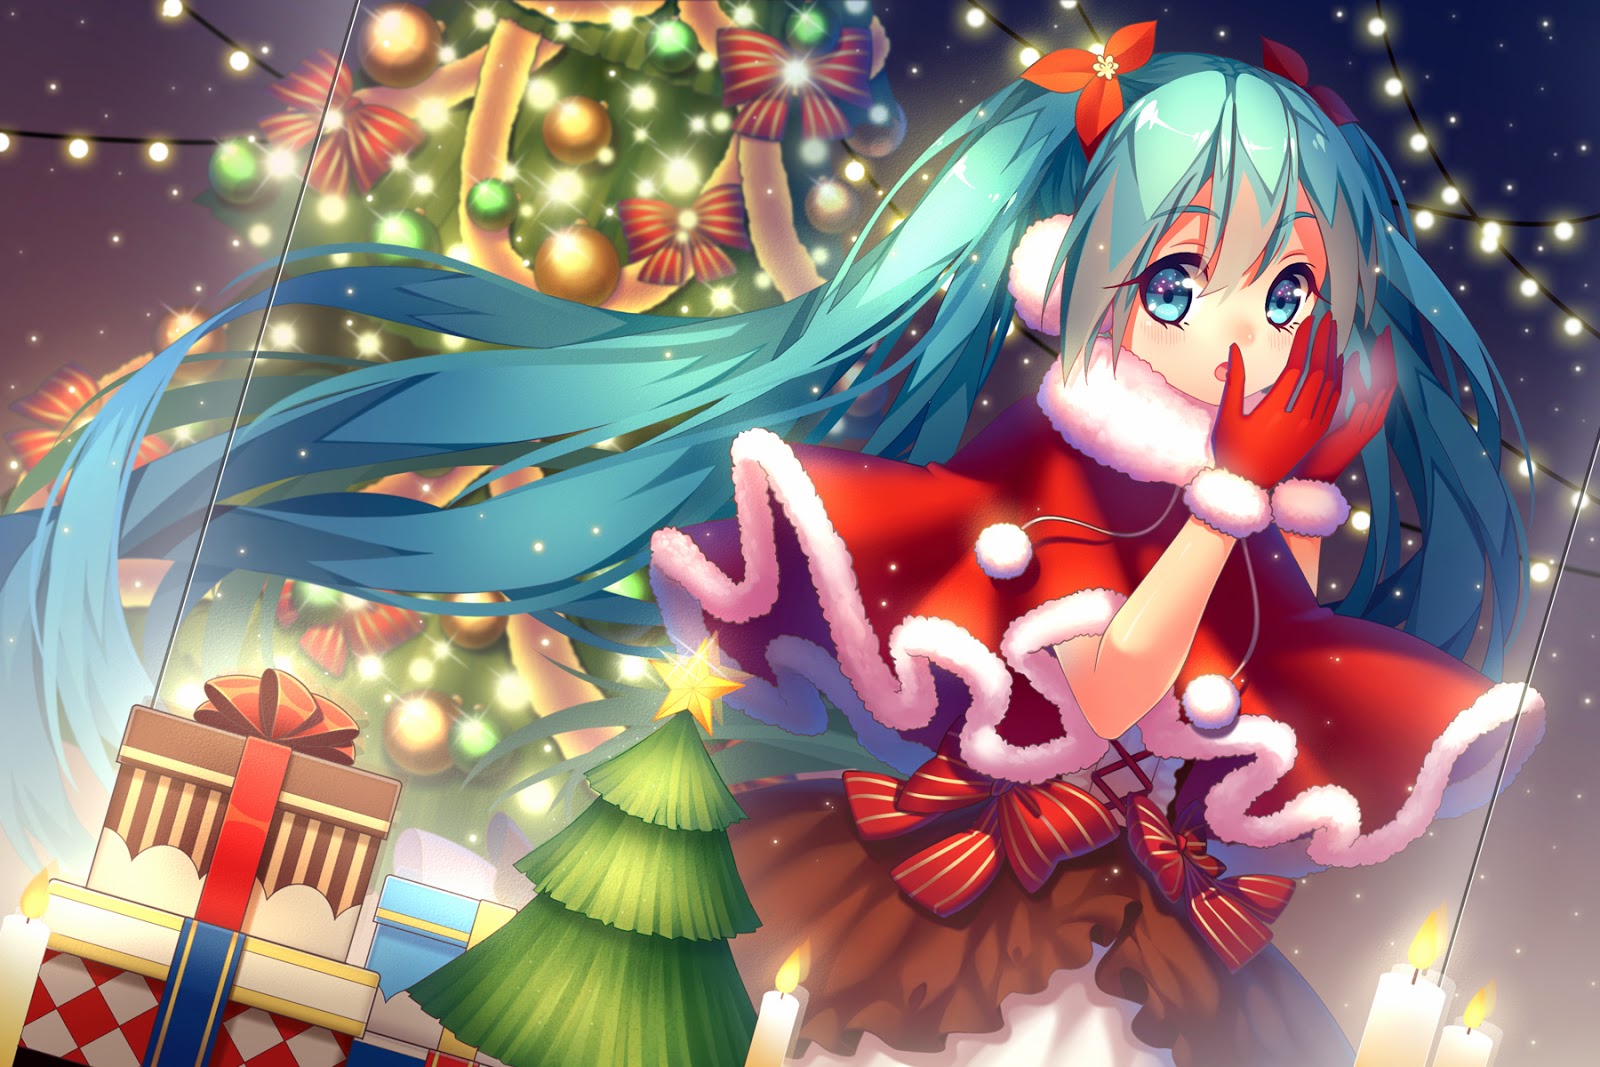 Mundo Otaku: Imágenes Anime de Navidad